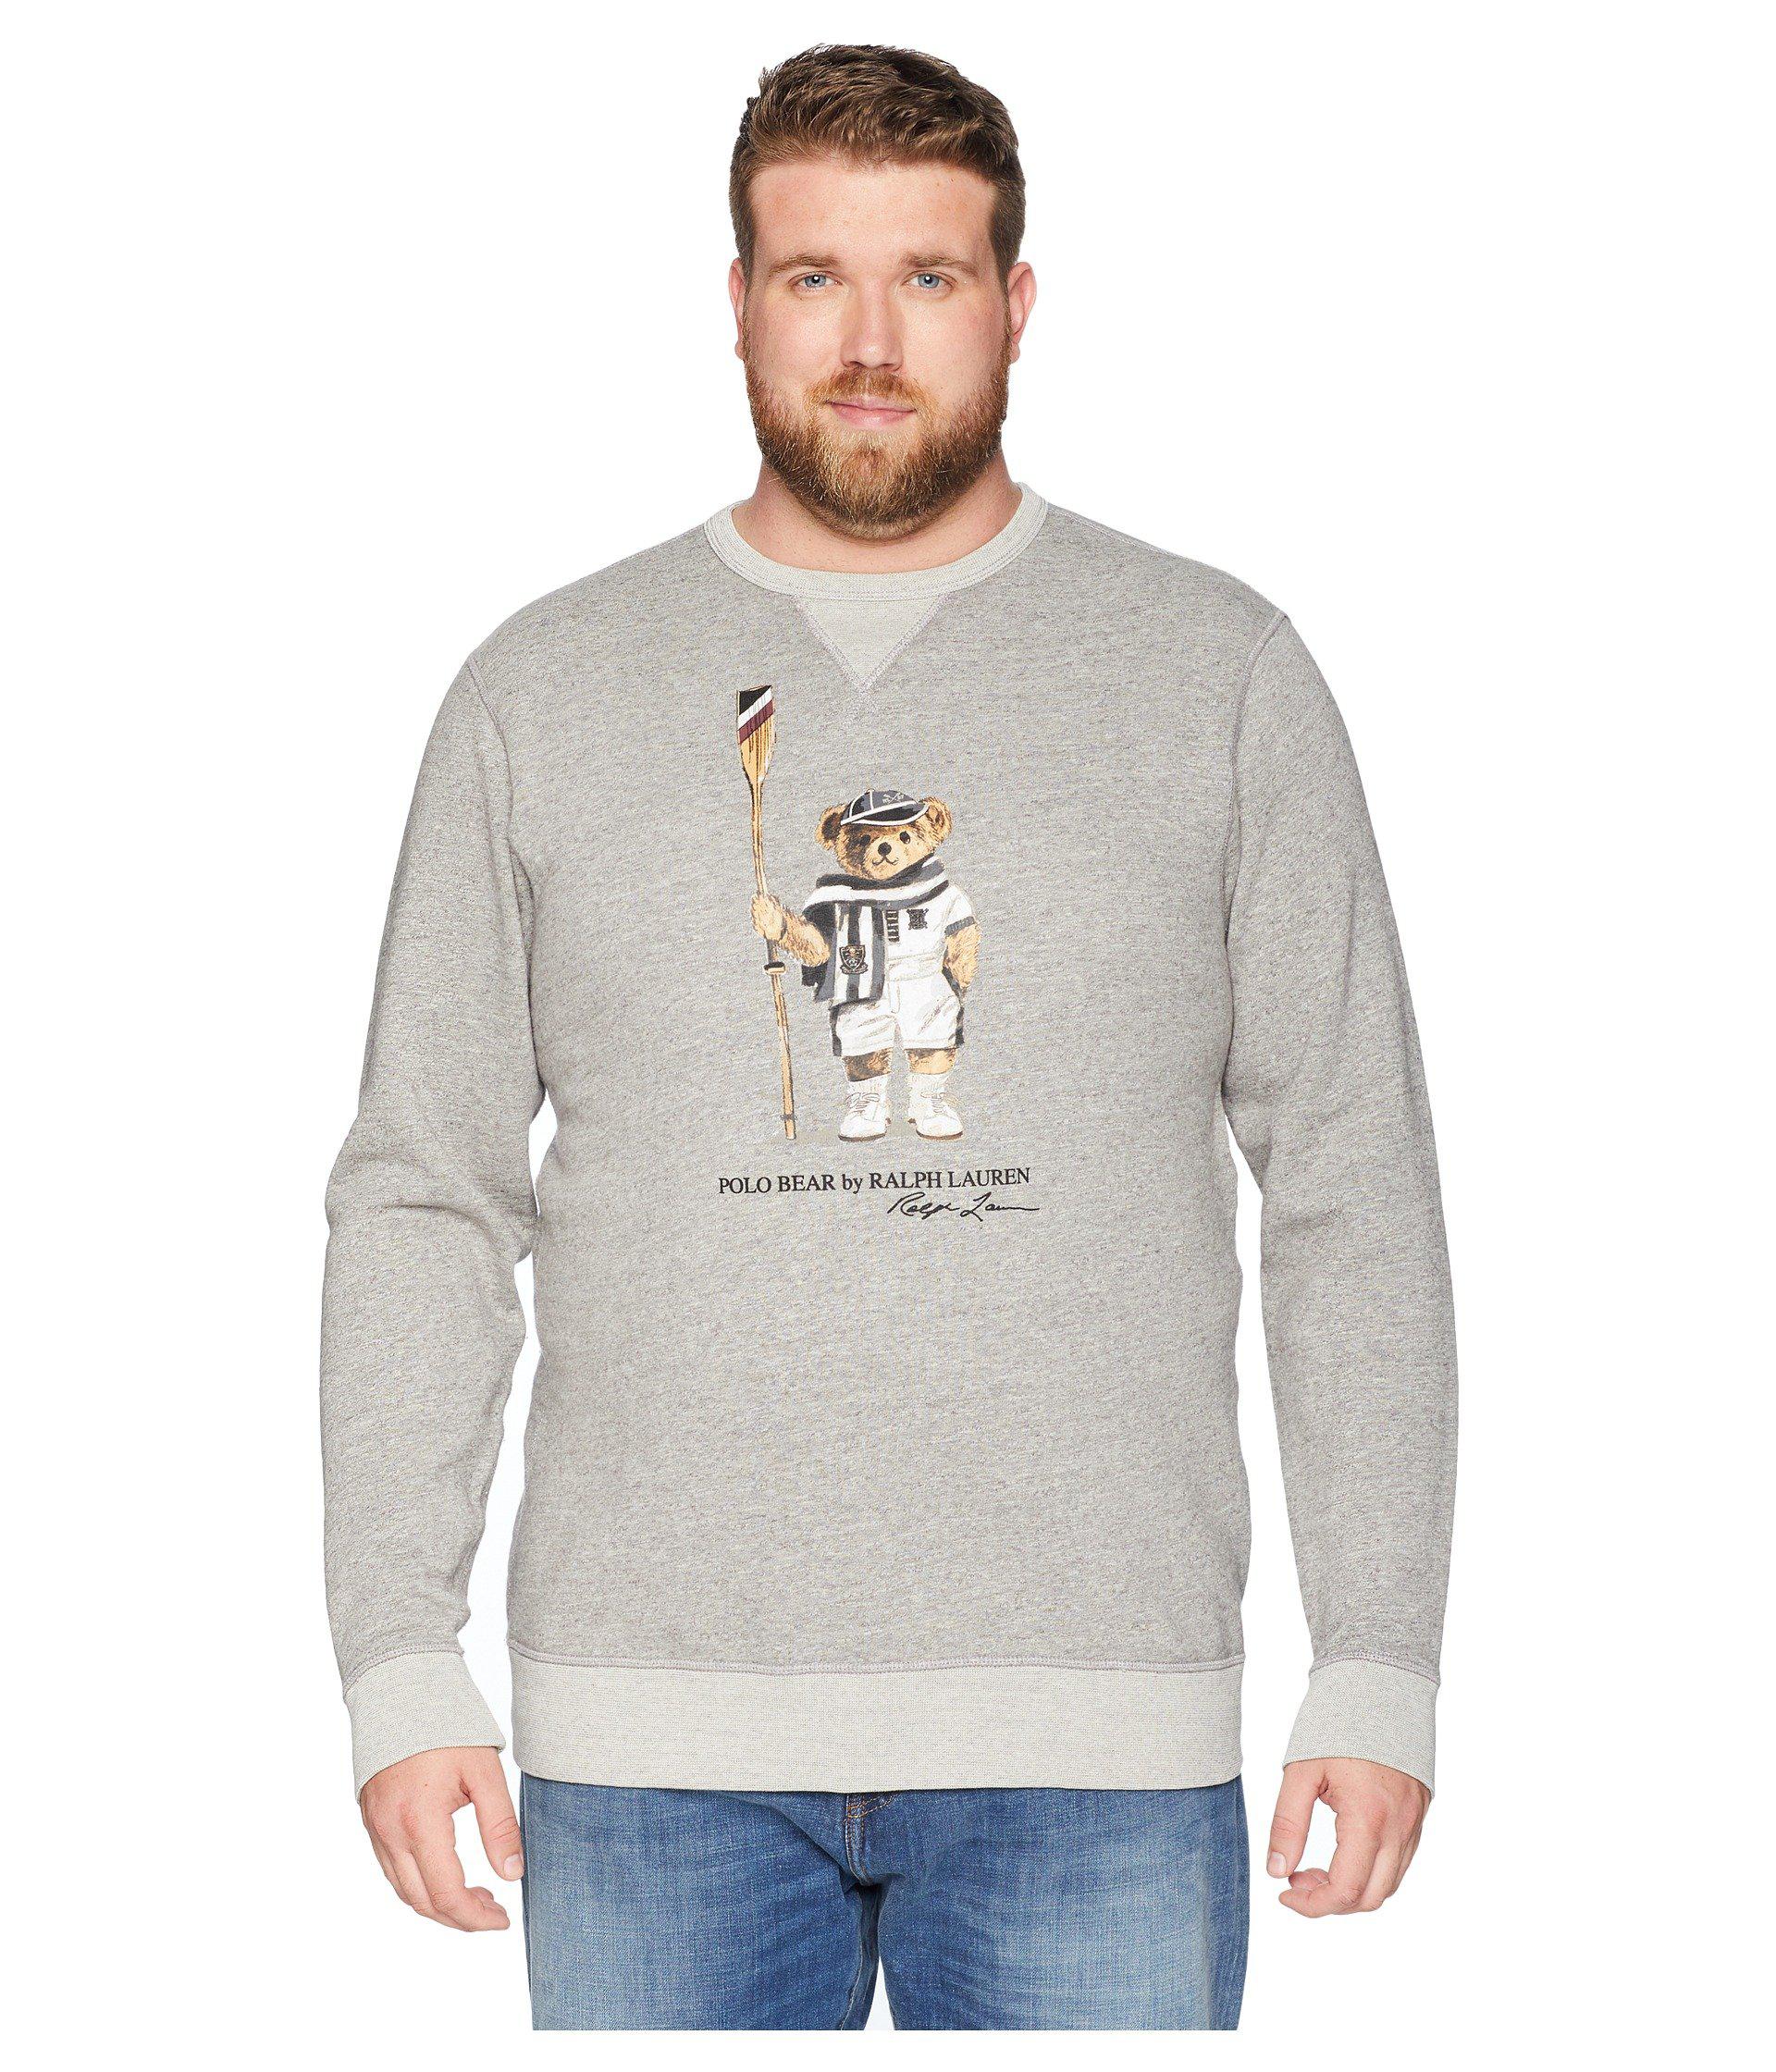 polo ralph lauren men's polo bear fleece sweatshirt